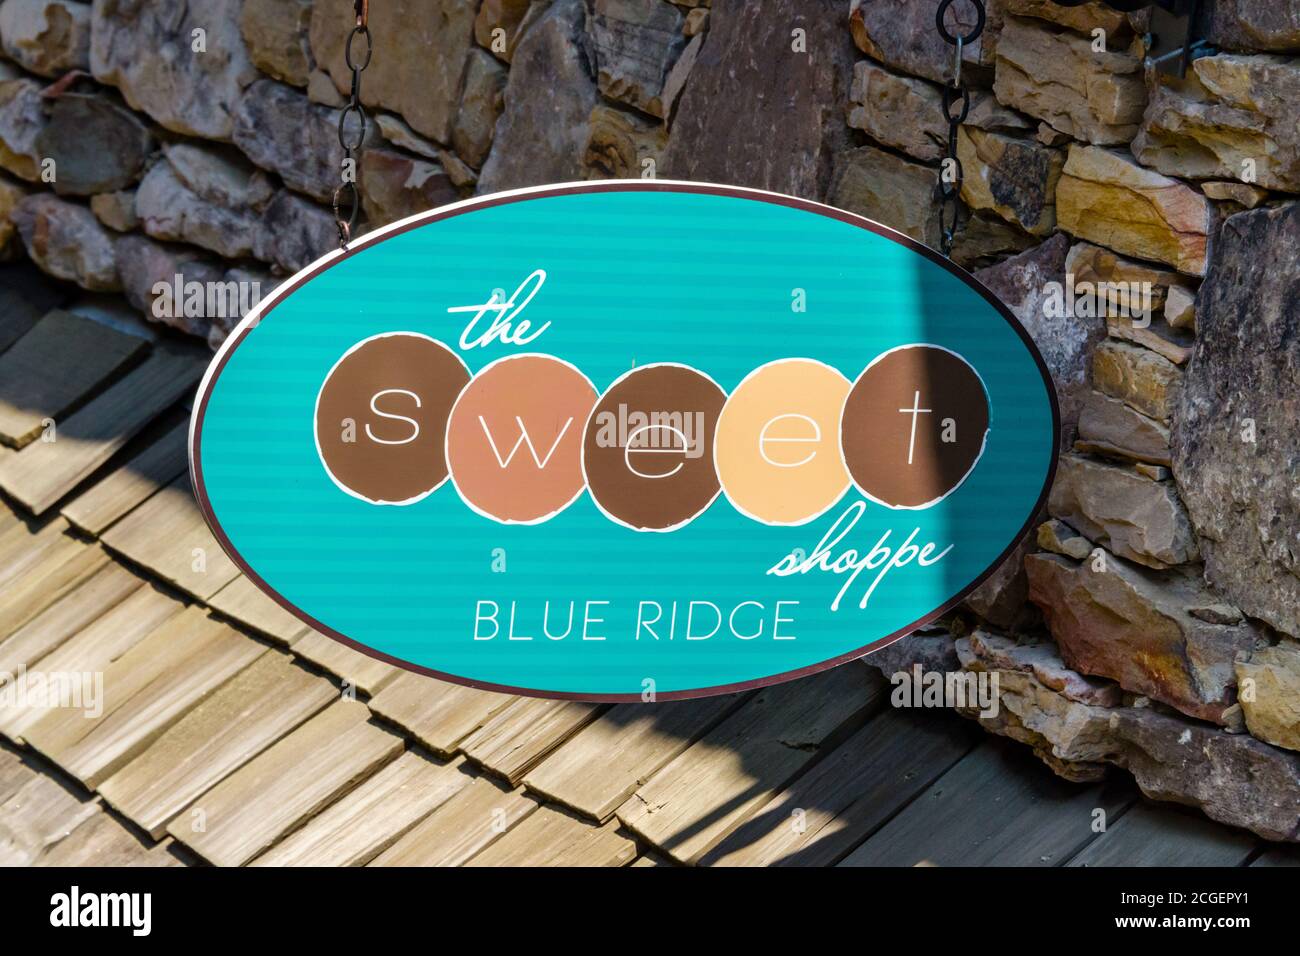 Northern Georgia, Blue Ridge, The Sweet Shoppe Stockfoto